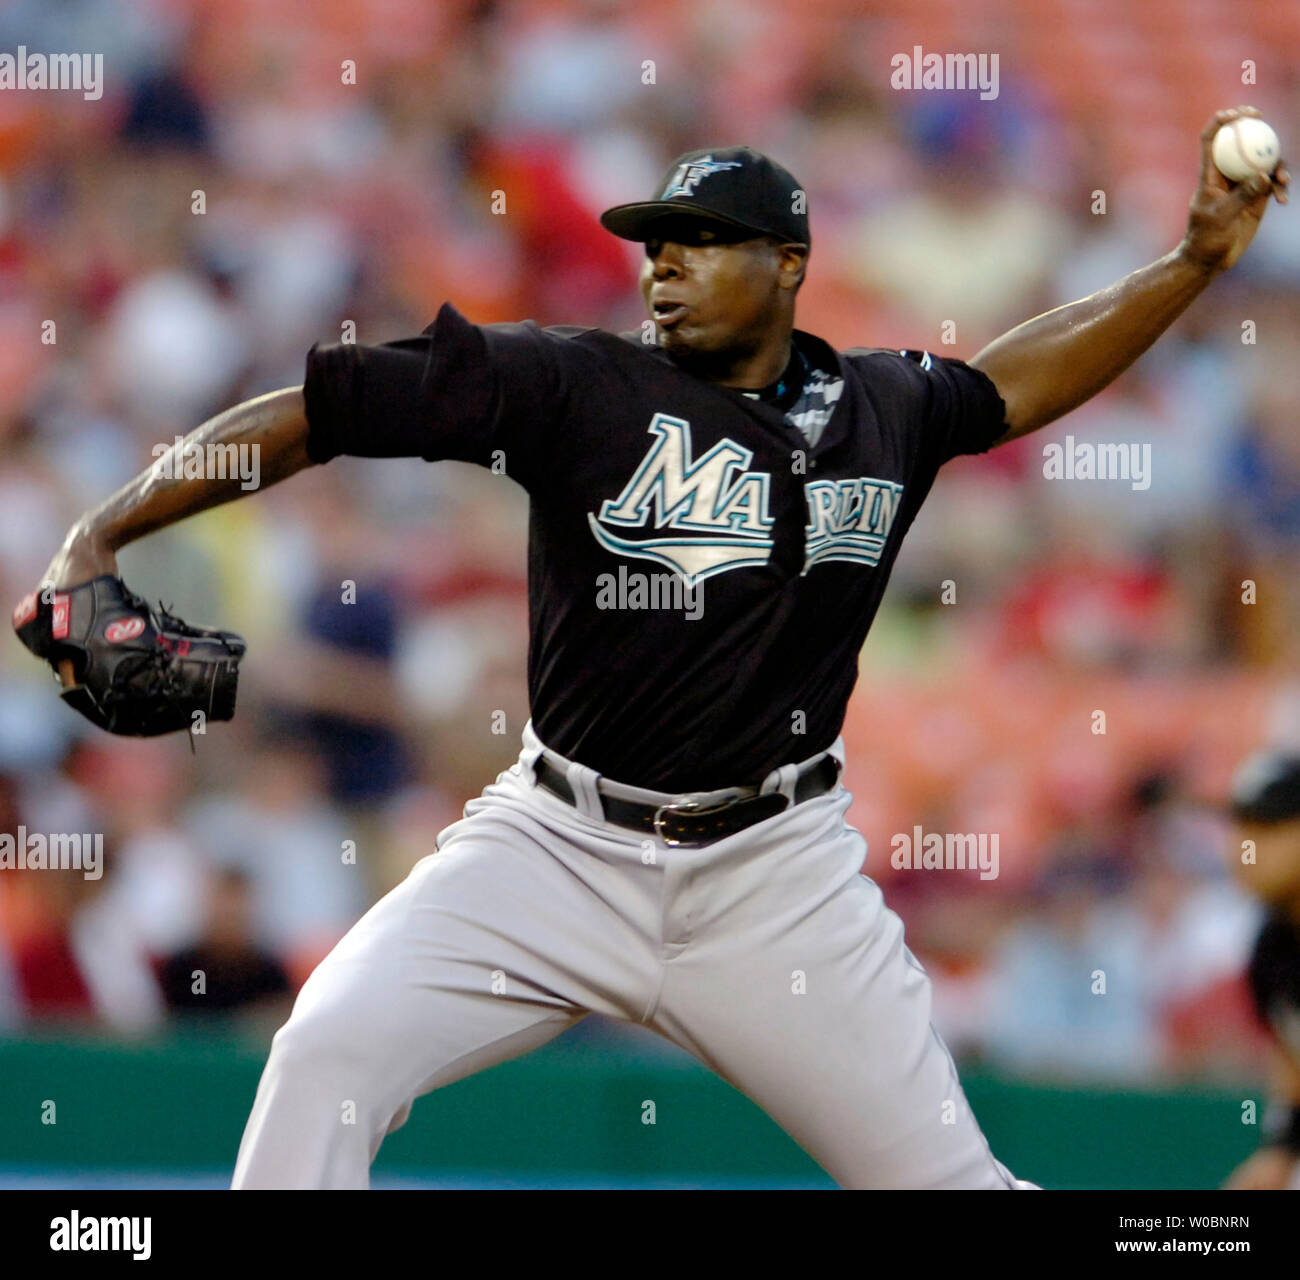 MLB: Phillies land Dontrelle Willis – The Mercury